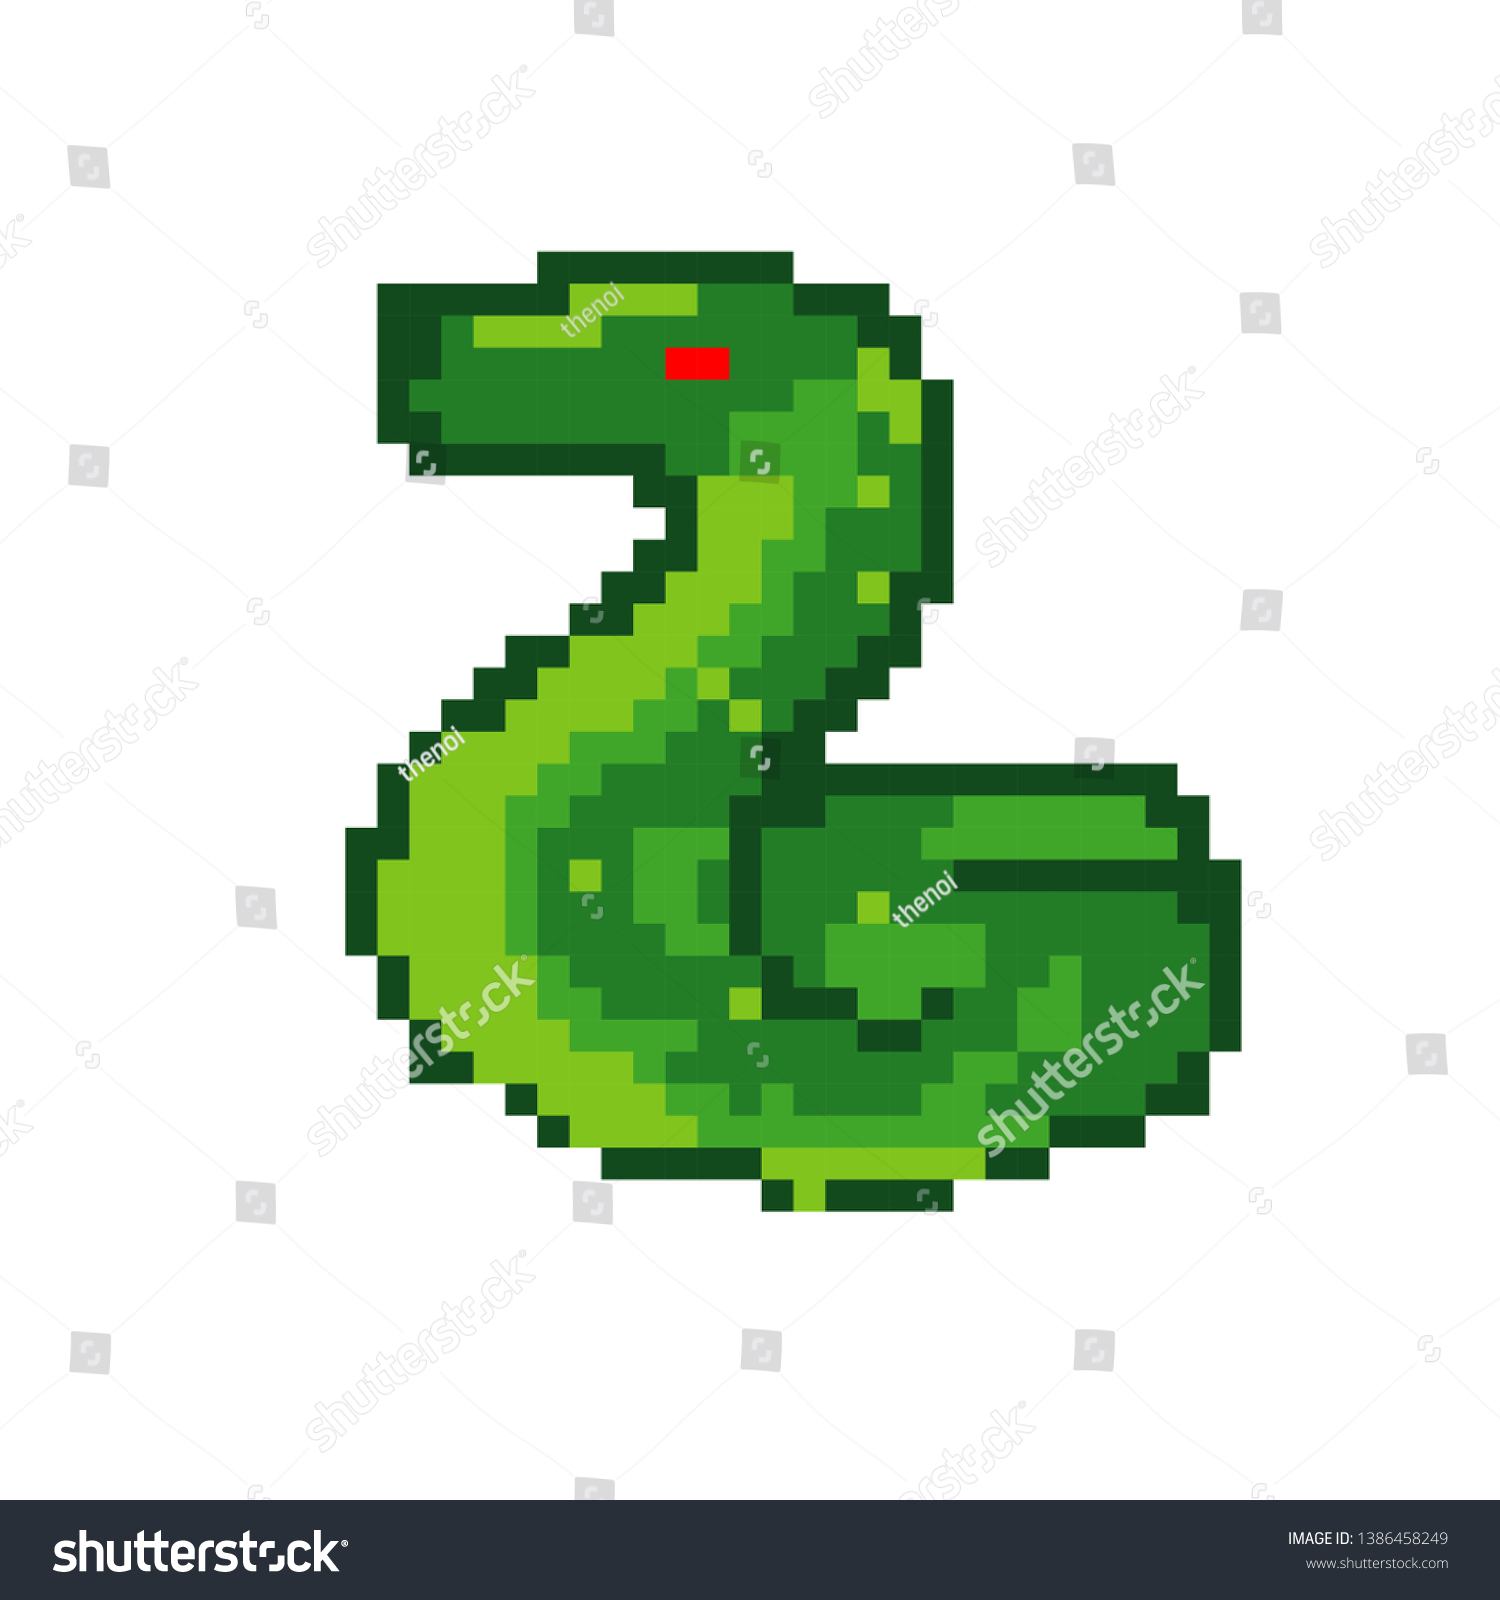 vector snake pixel art color - Royalty Free Stock Vector 1386458249 ...